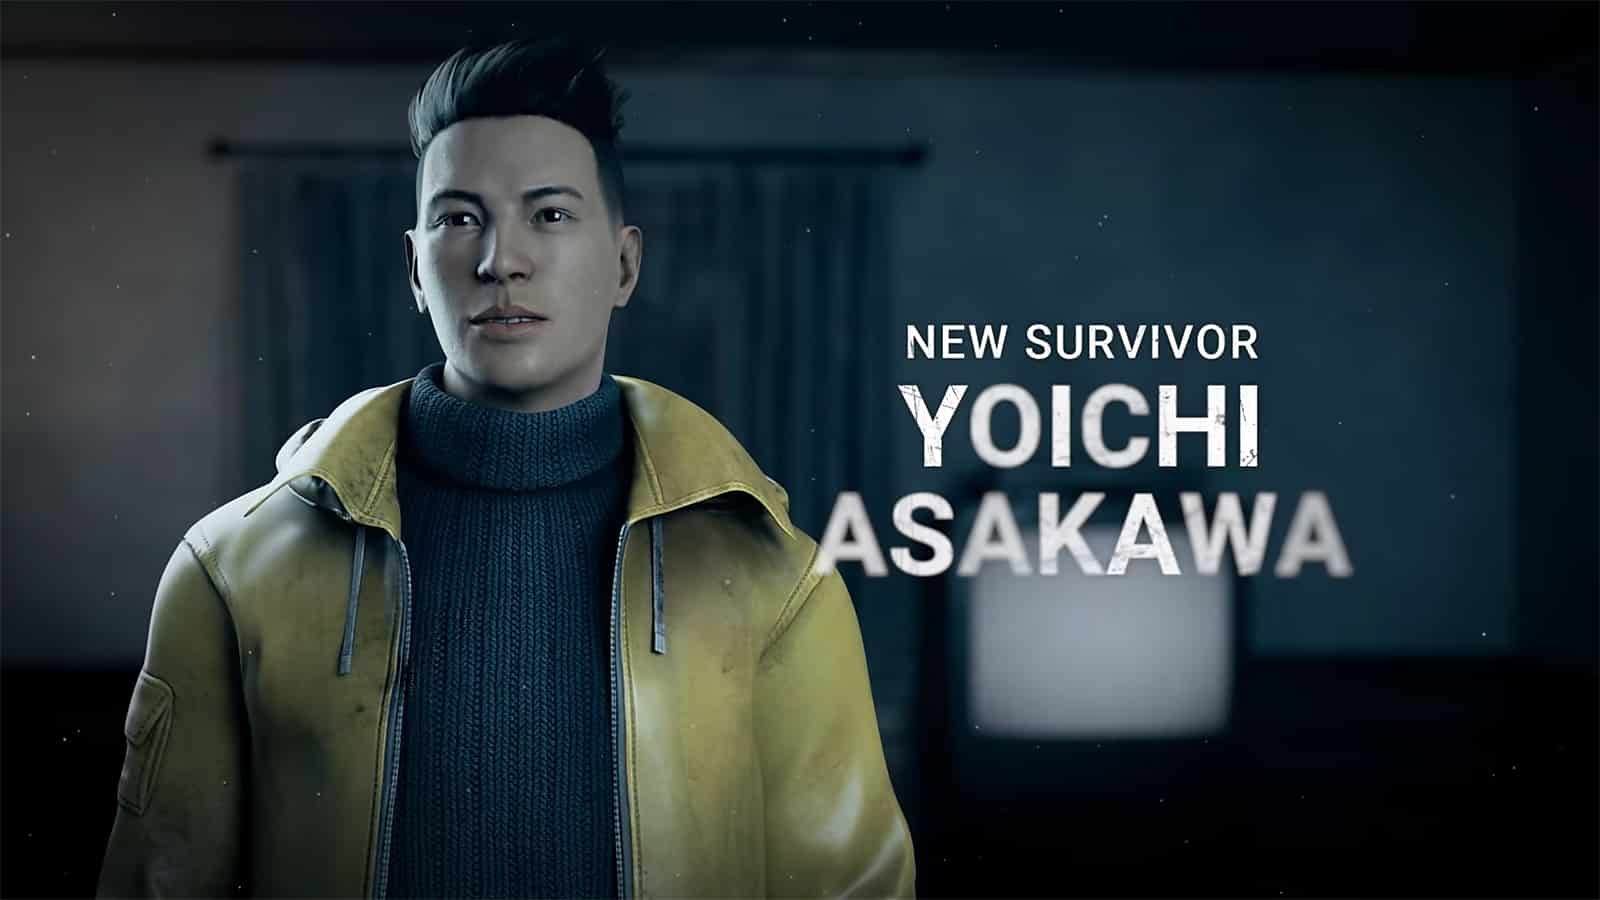 Yoichi Asakawa, Dead by Daylight's newest Survivor